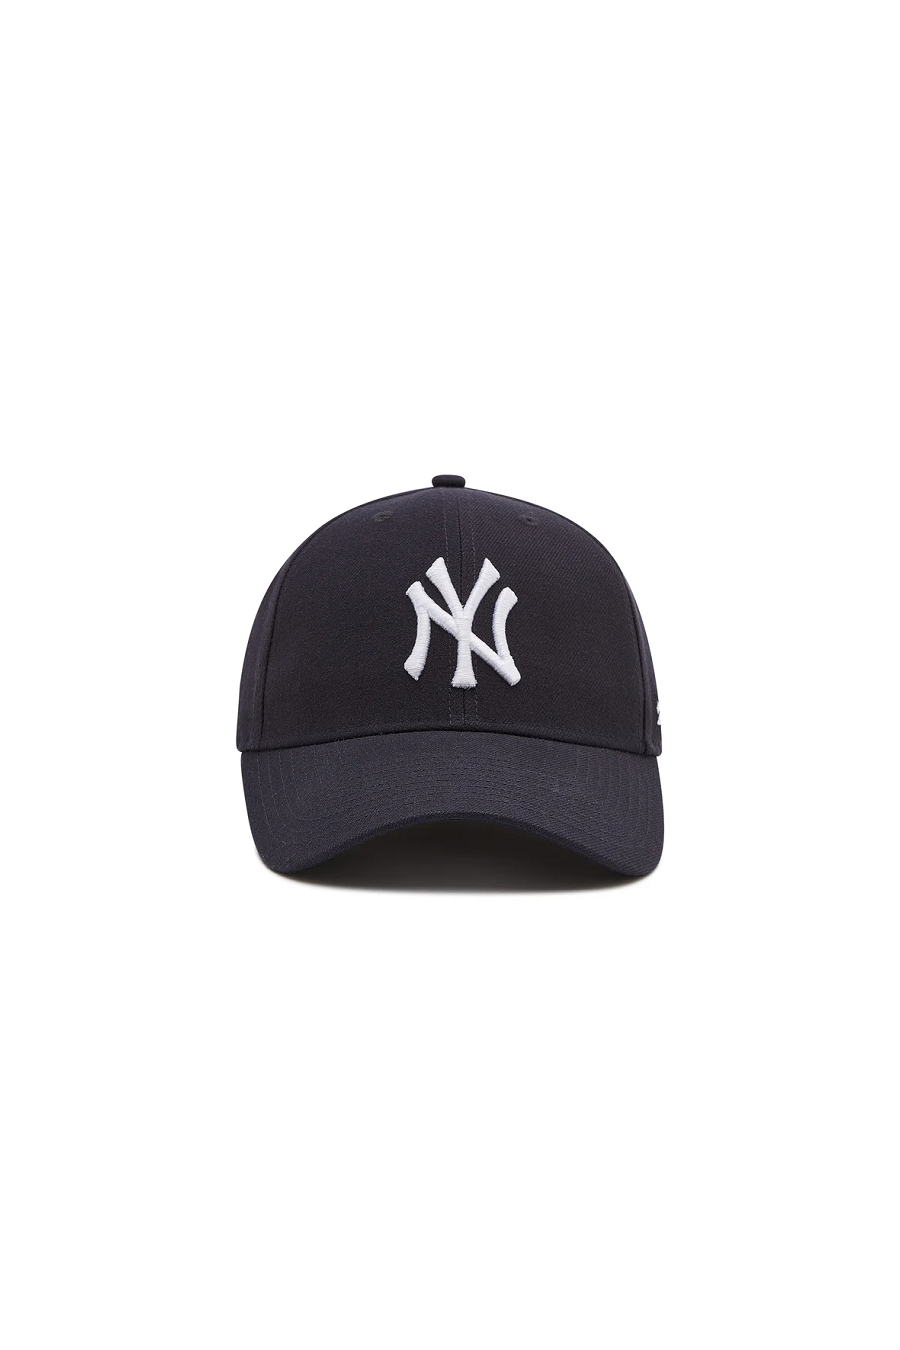 Gorra 47brand New York Yankees - Unisex